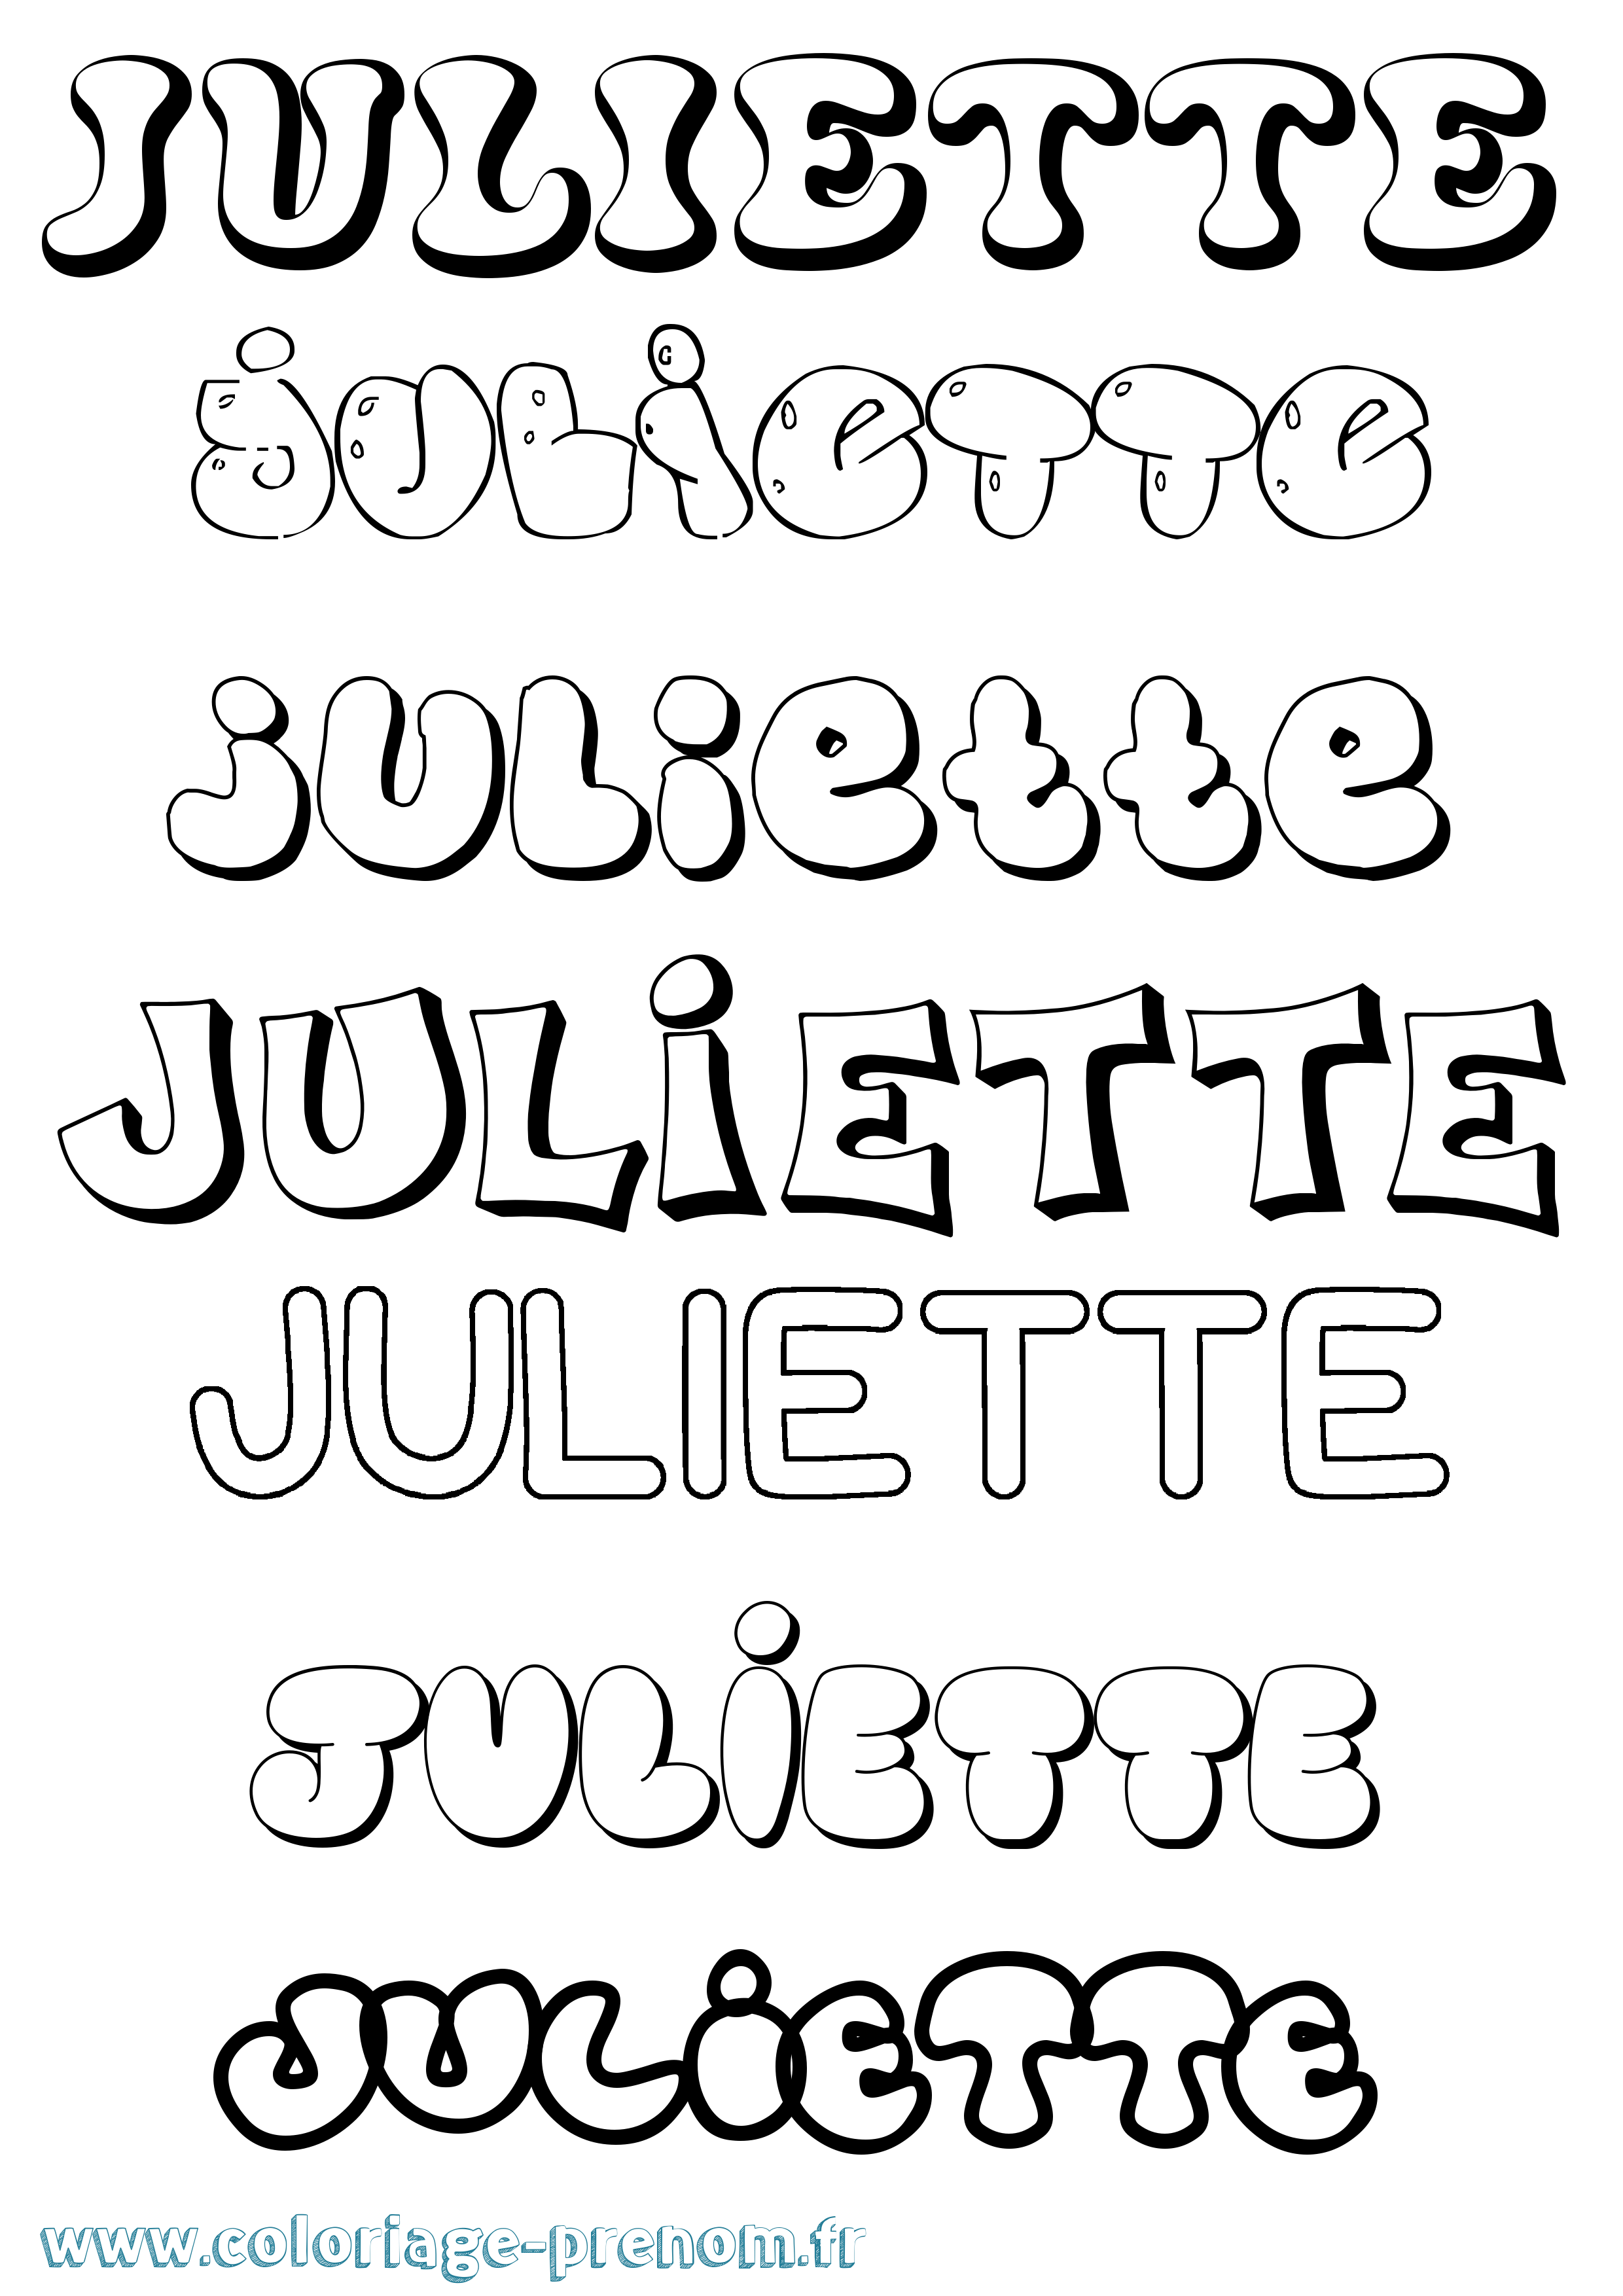 Coloriage prénom Juliette